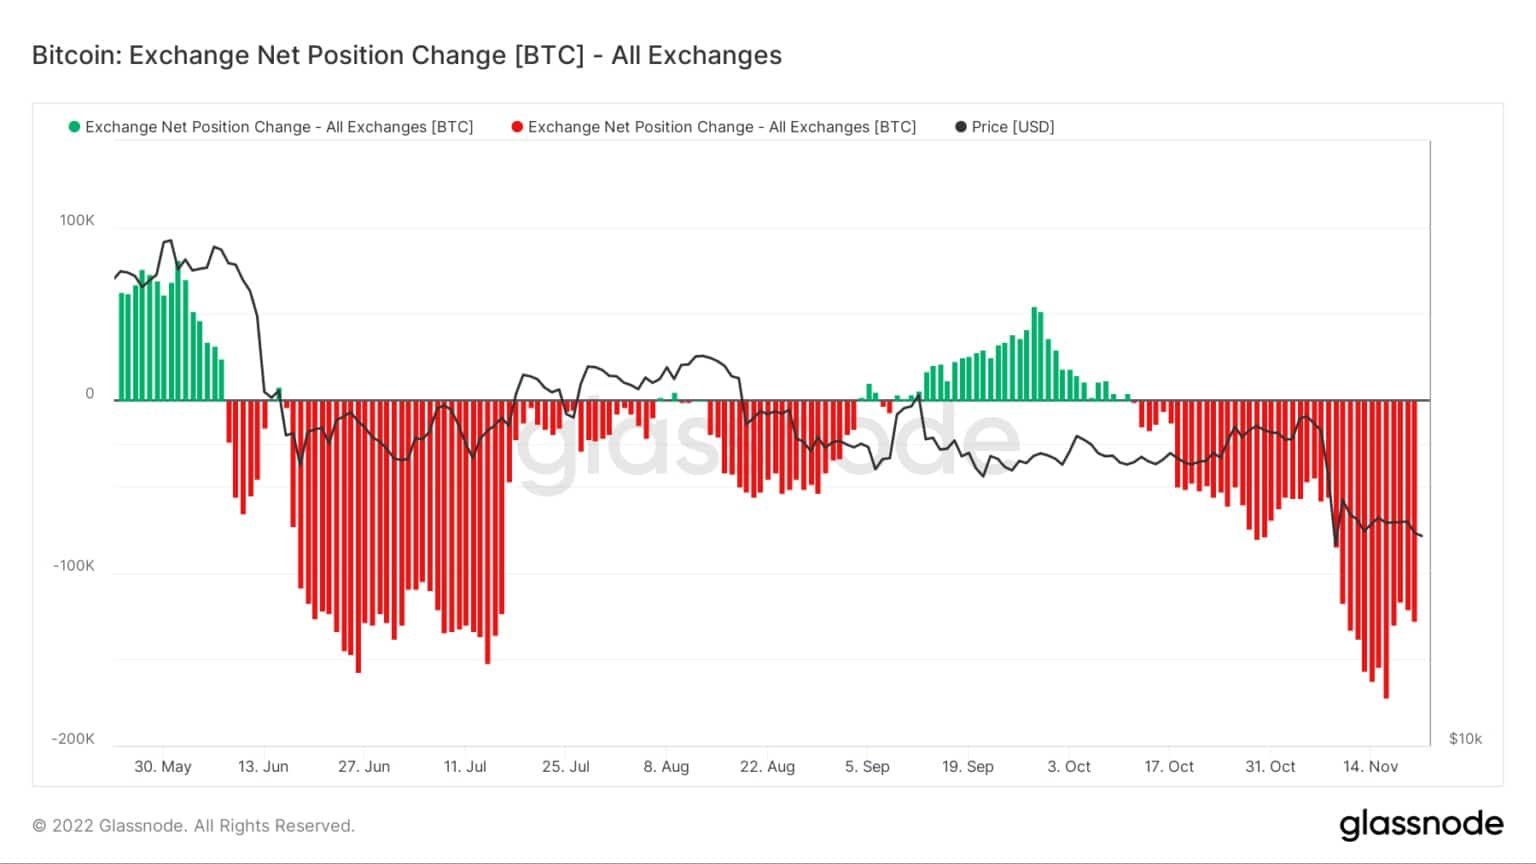 Bitcoin: Exchange Net Position Change - All Exchanges (Source: Glassnode)